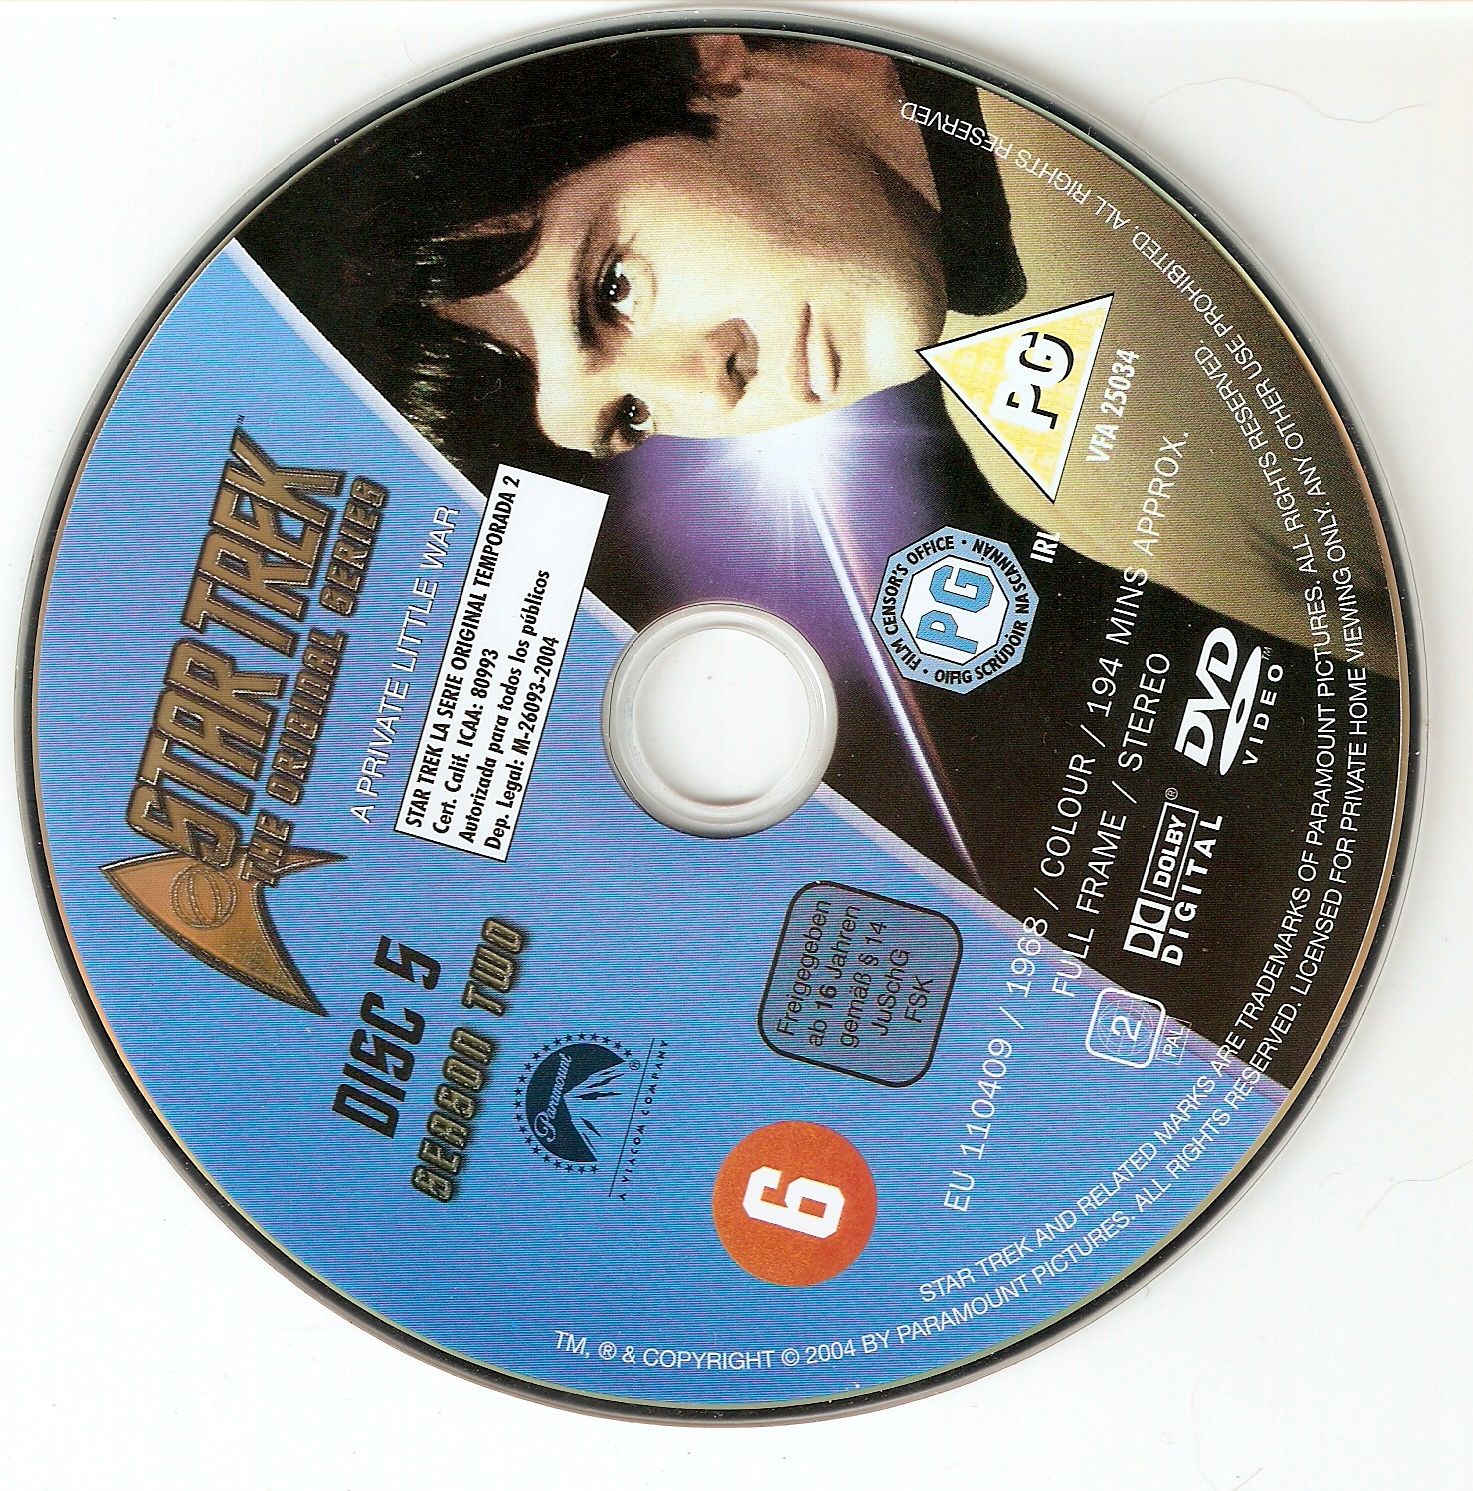 Star trek saison 2 DVD 5